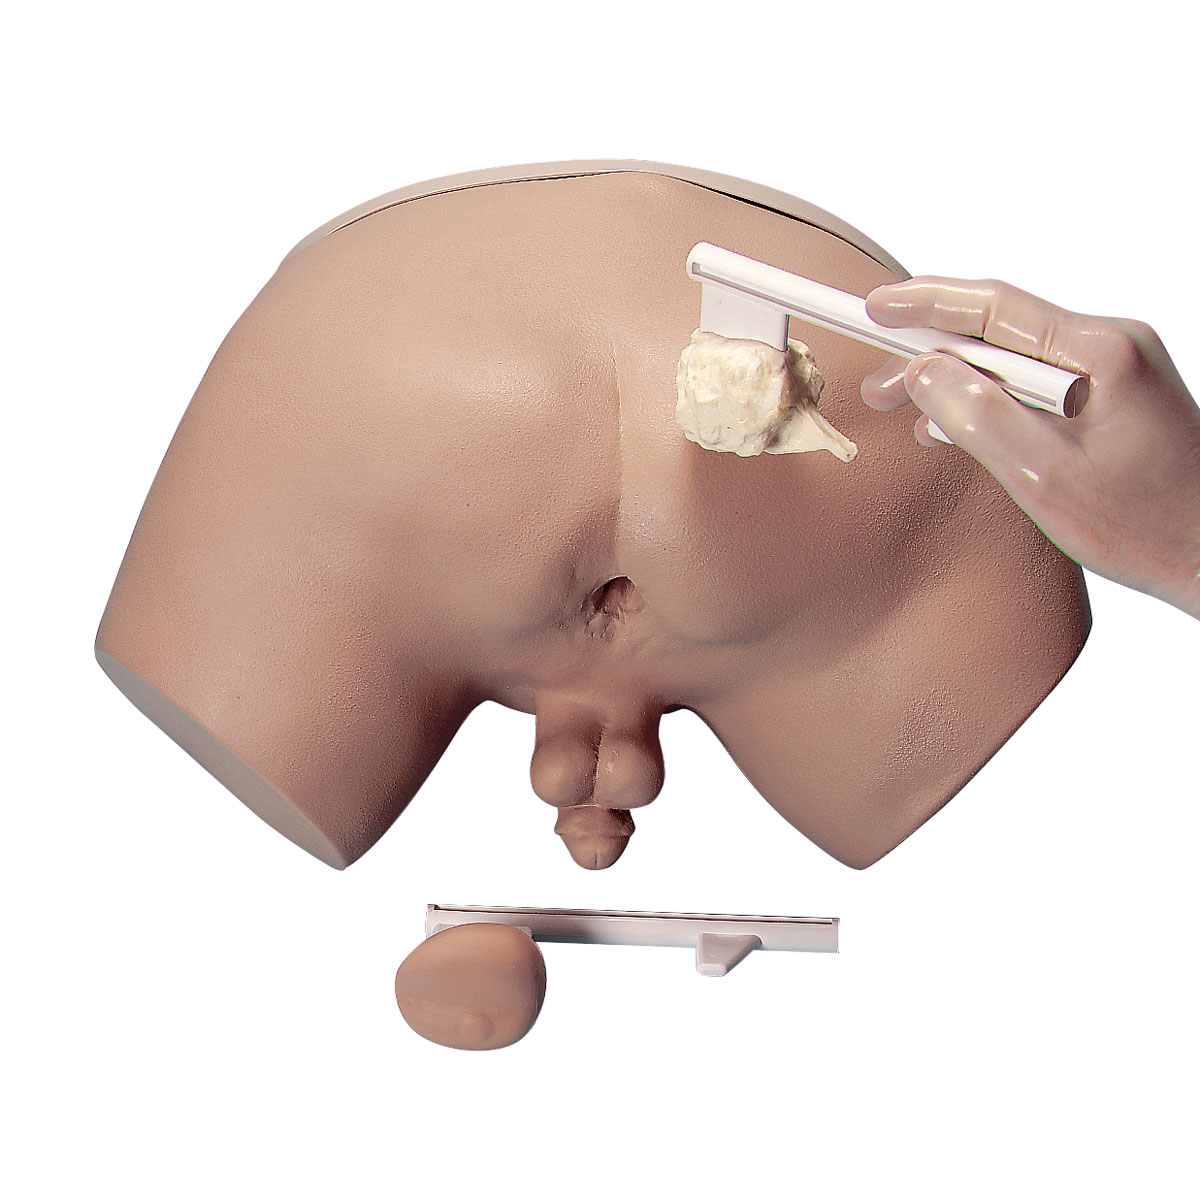 Prostatauntersuchungs-Simulator, Bestellnummer 1005594, R10031, W44014, LF00901U, Nasco Life/form